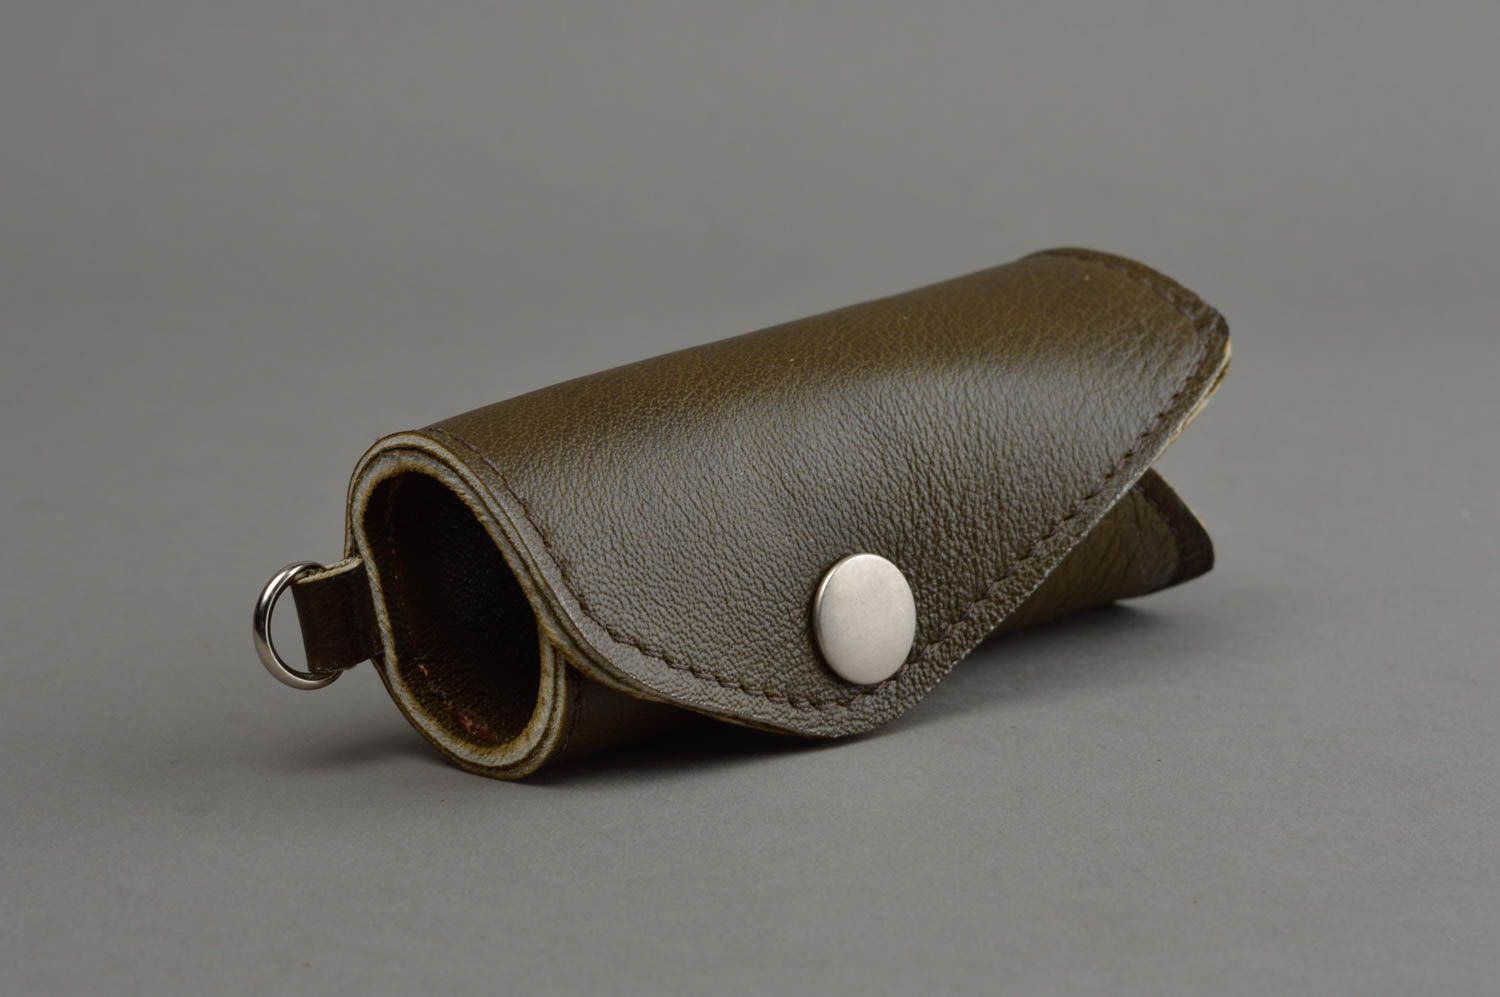 Unusual handmade leather key case designer key purse leather goods ideas photo 2